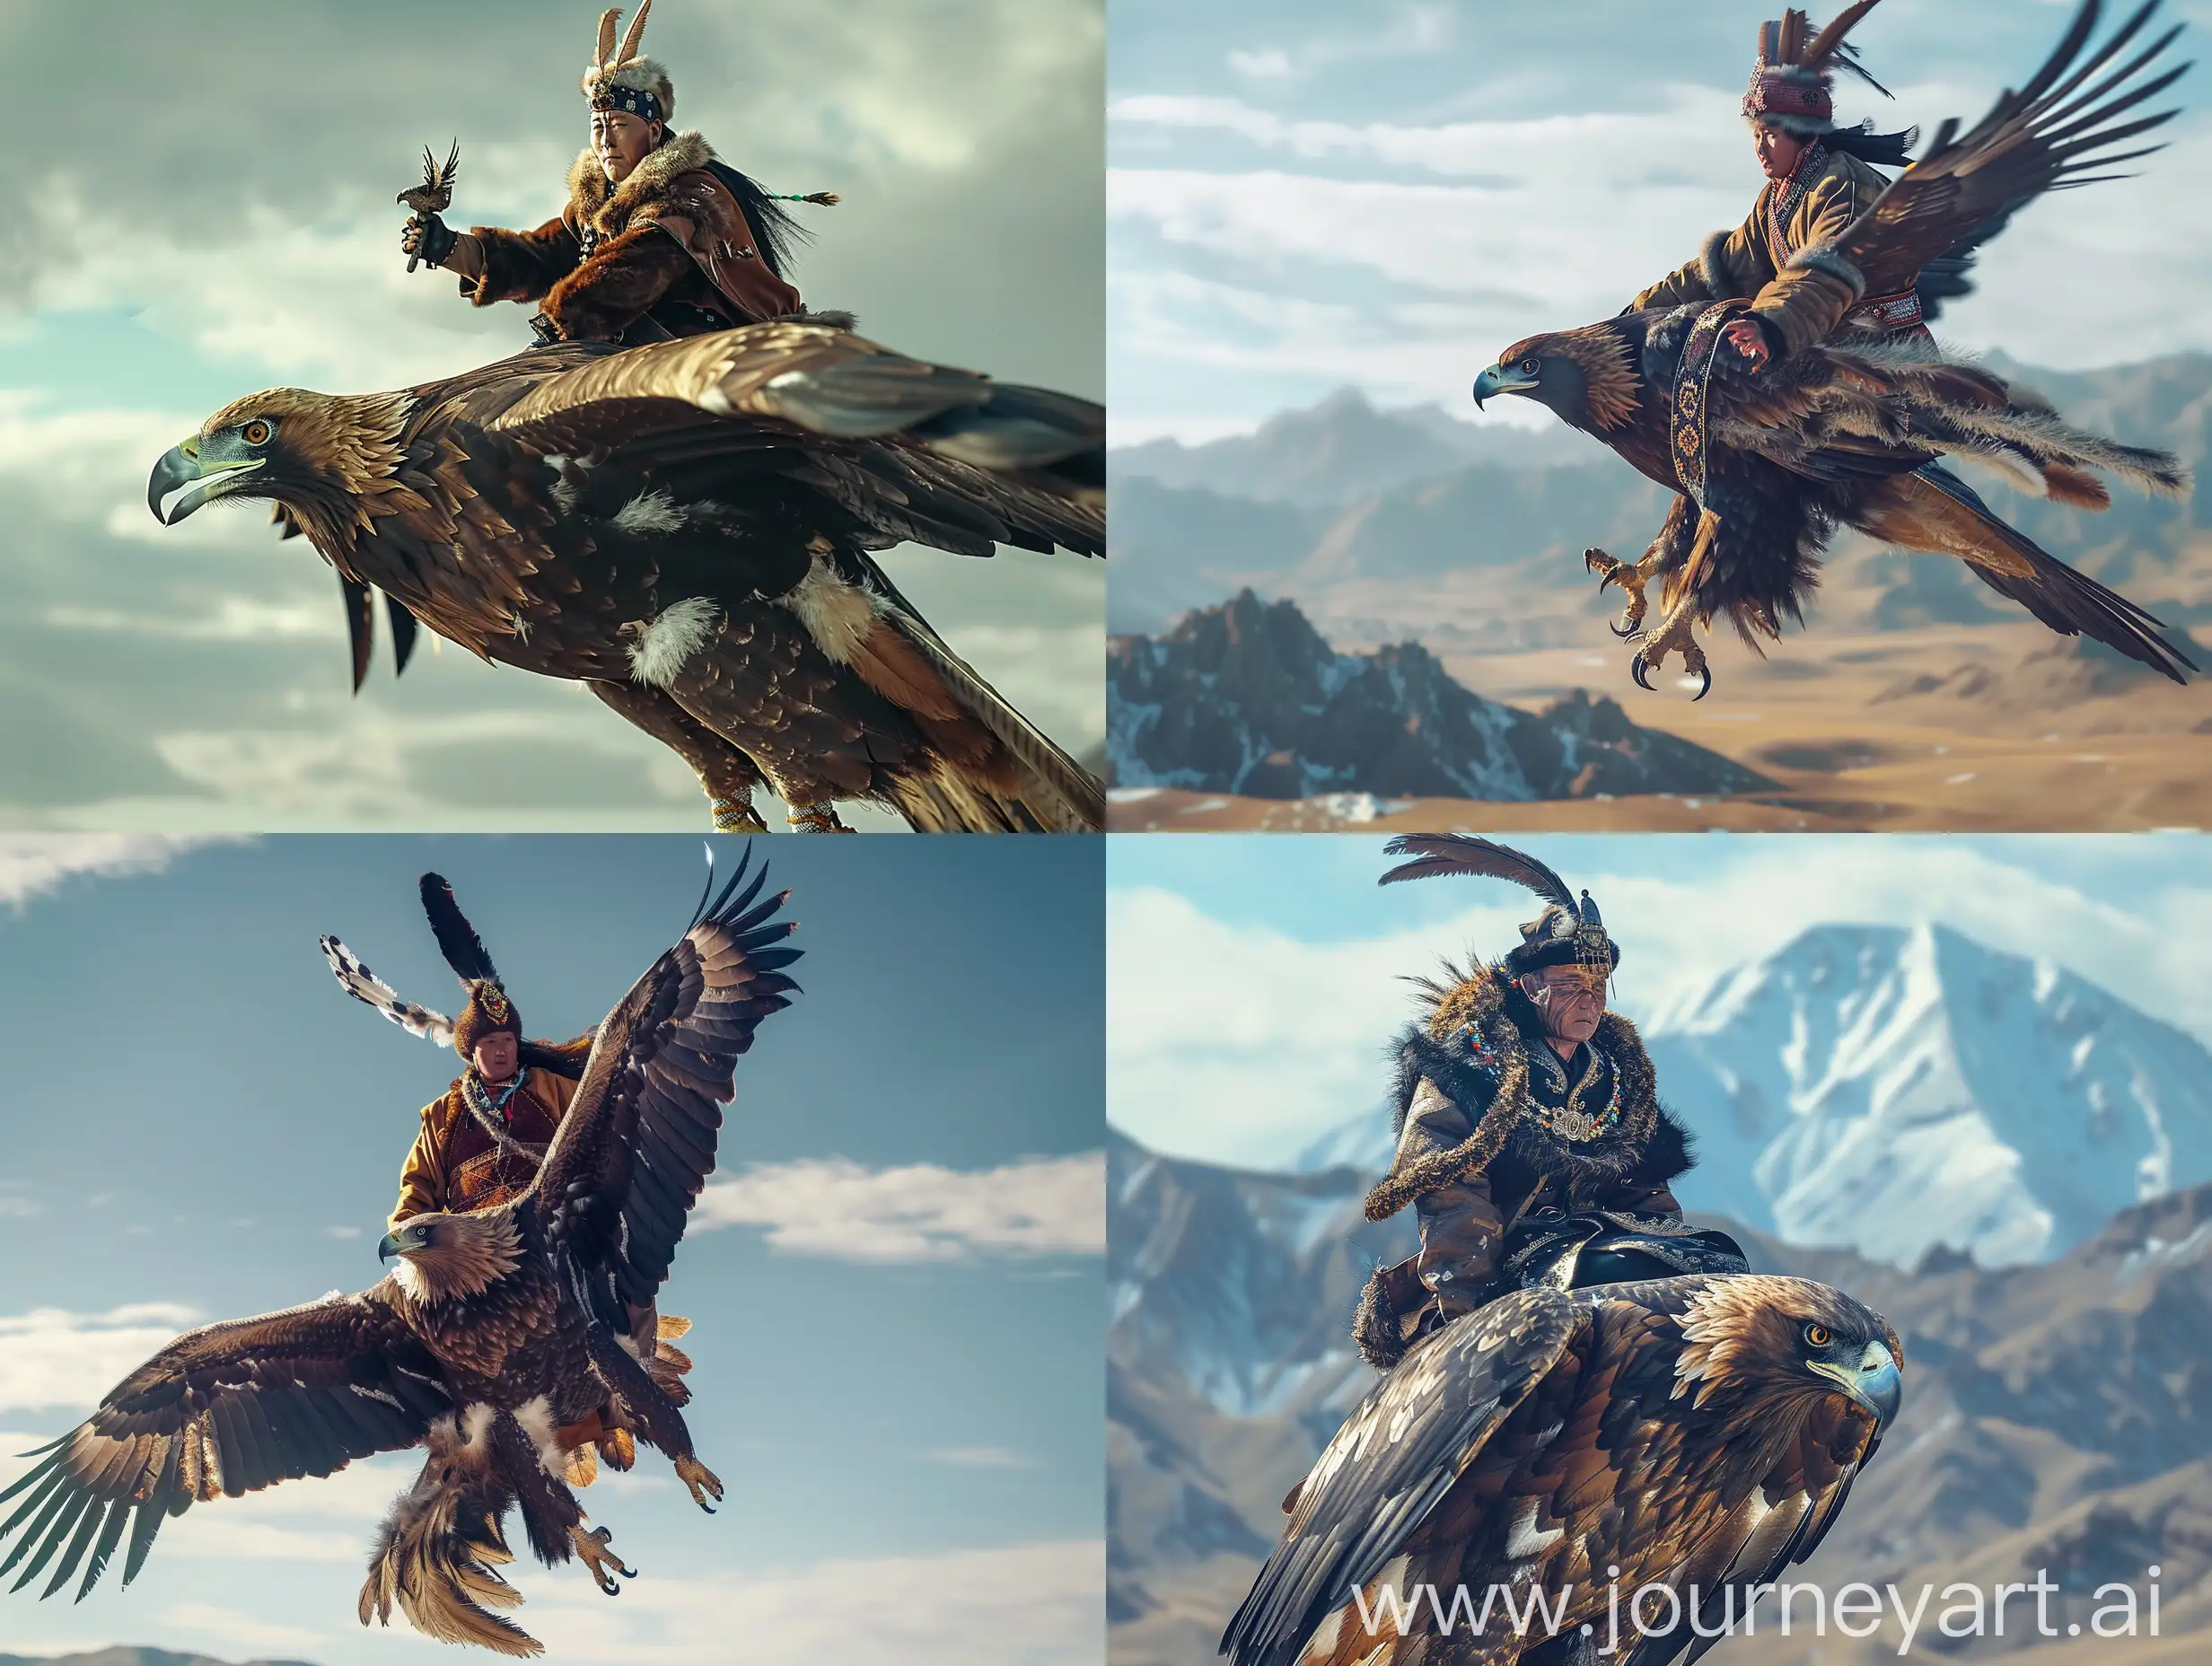 Mongolian-Shaman-Riding-Sacred-Eagle-Realistic-UltraHD-HDR-PrizeWinning-Photo